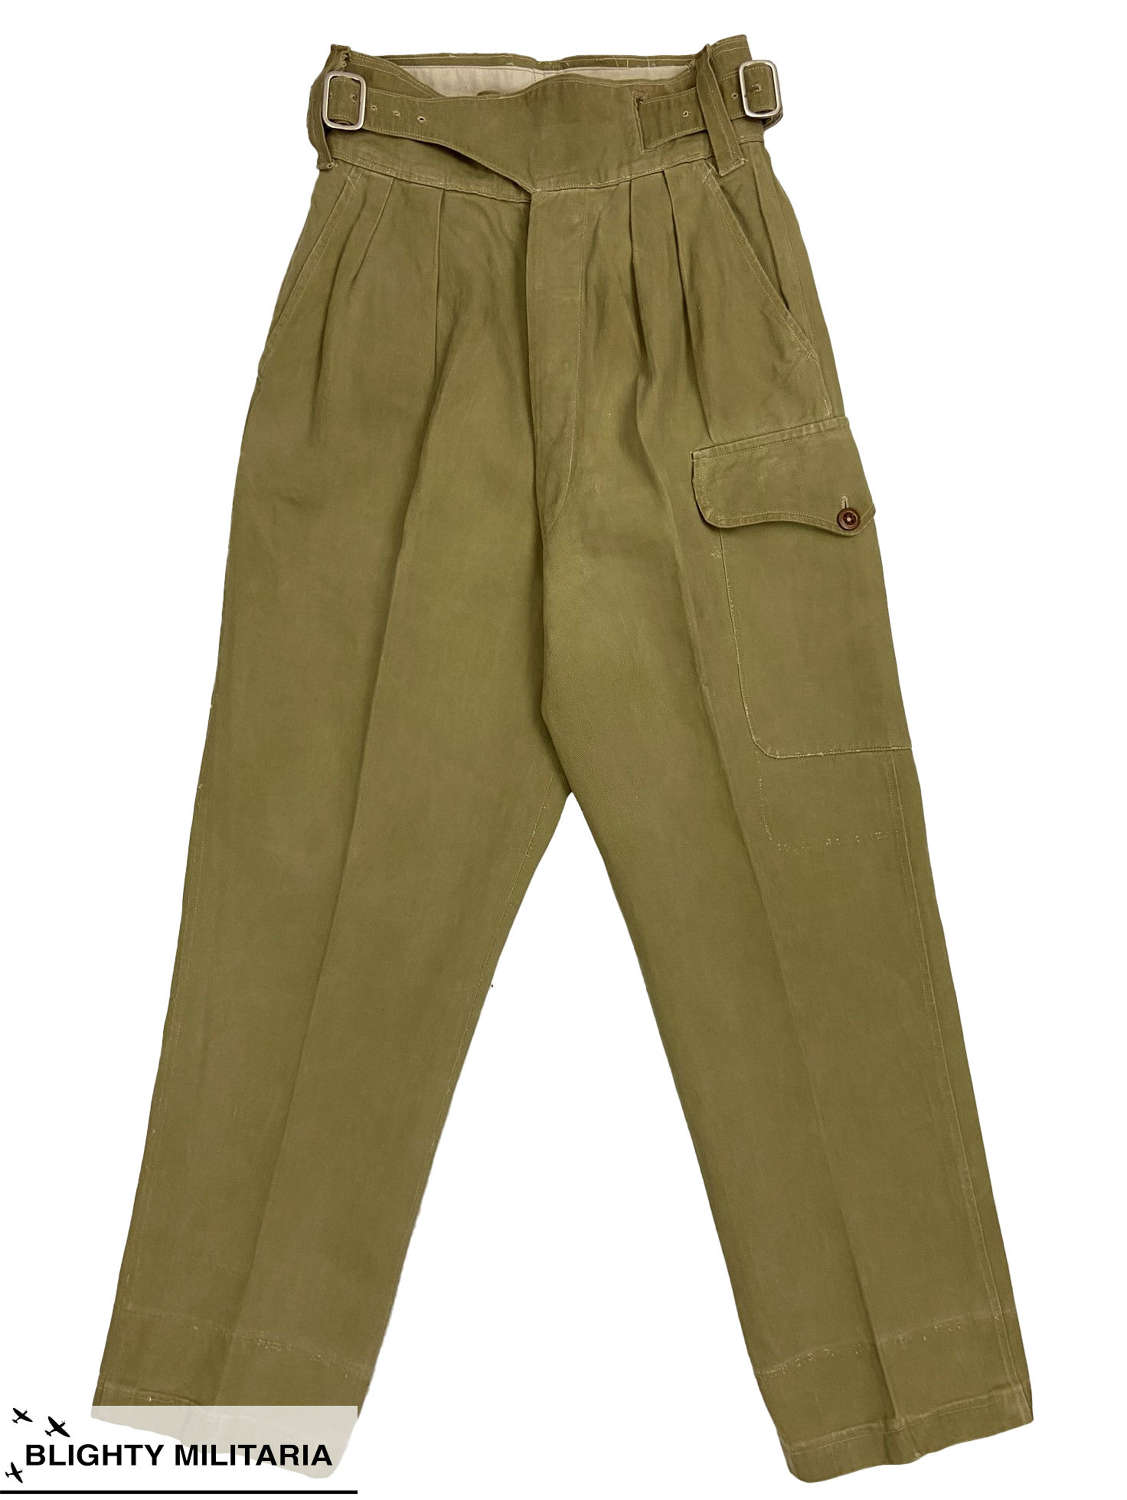 Original 1950s British Khaki Drill Trousers - 1950 Pattern Style